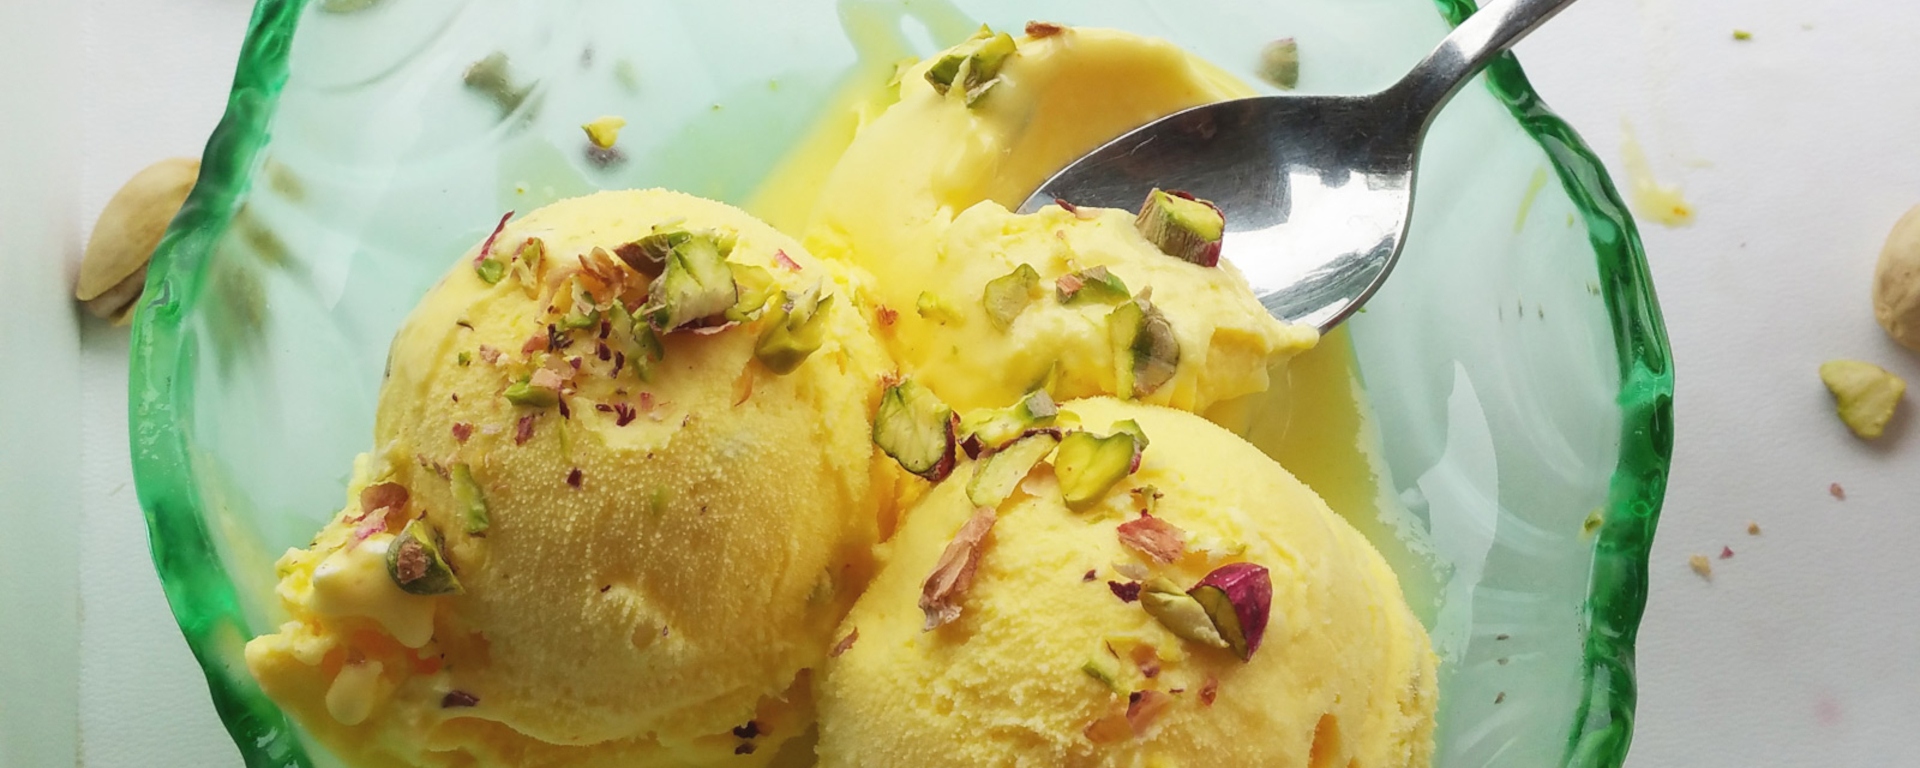 LuvMyRecipe.com - Persian ice cream at home Featured